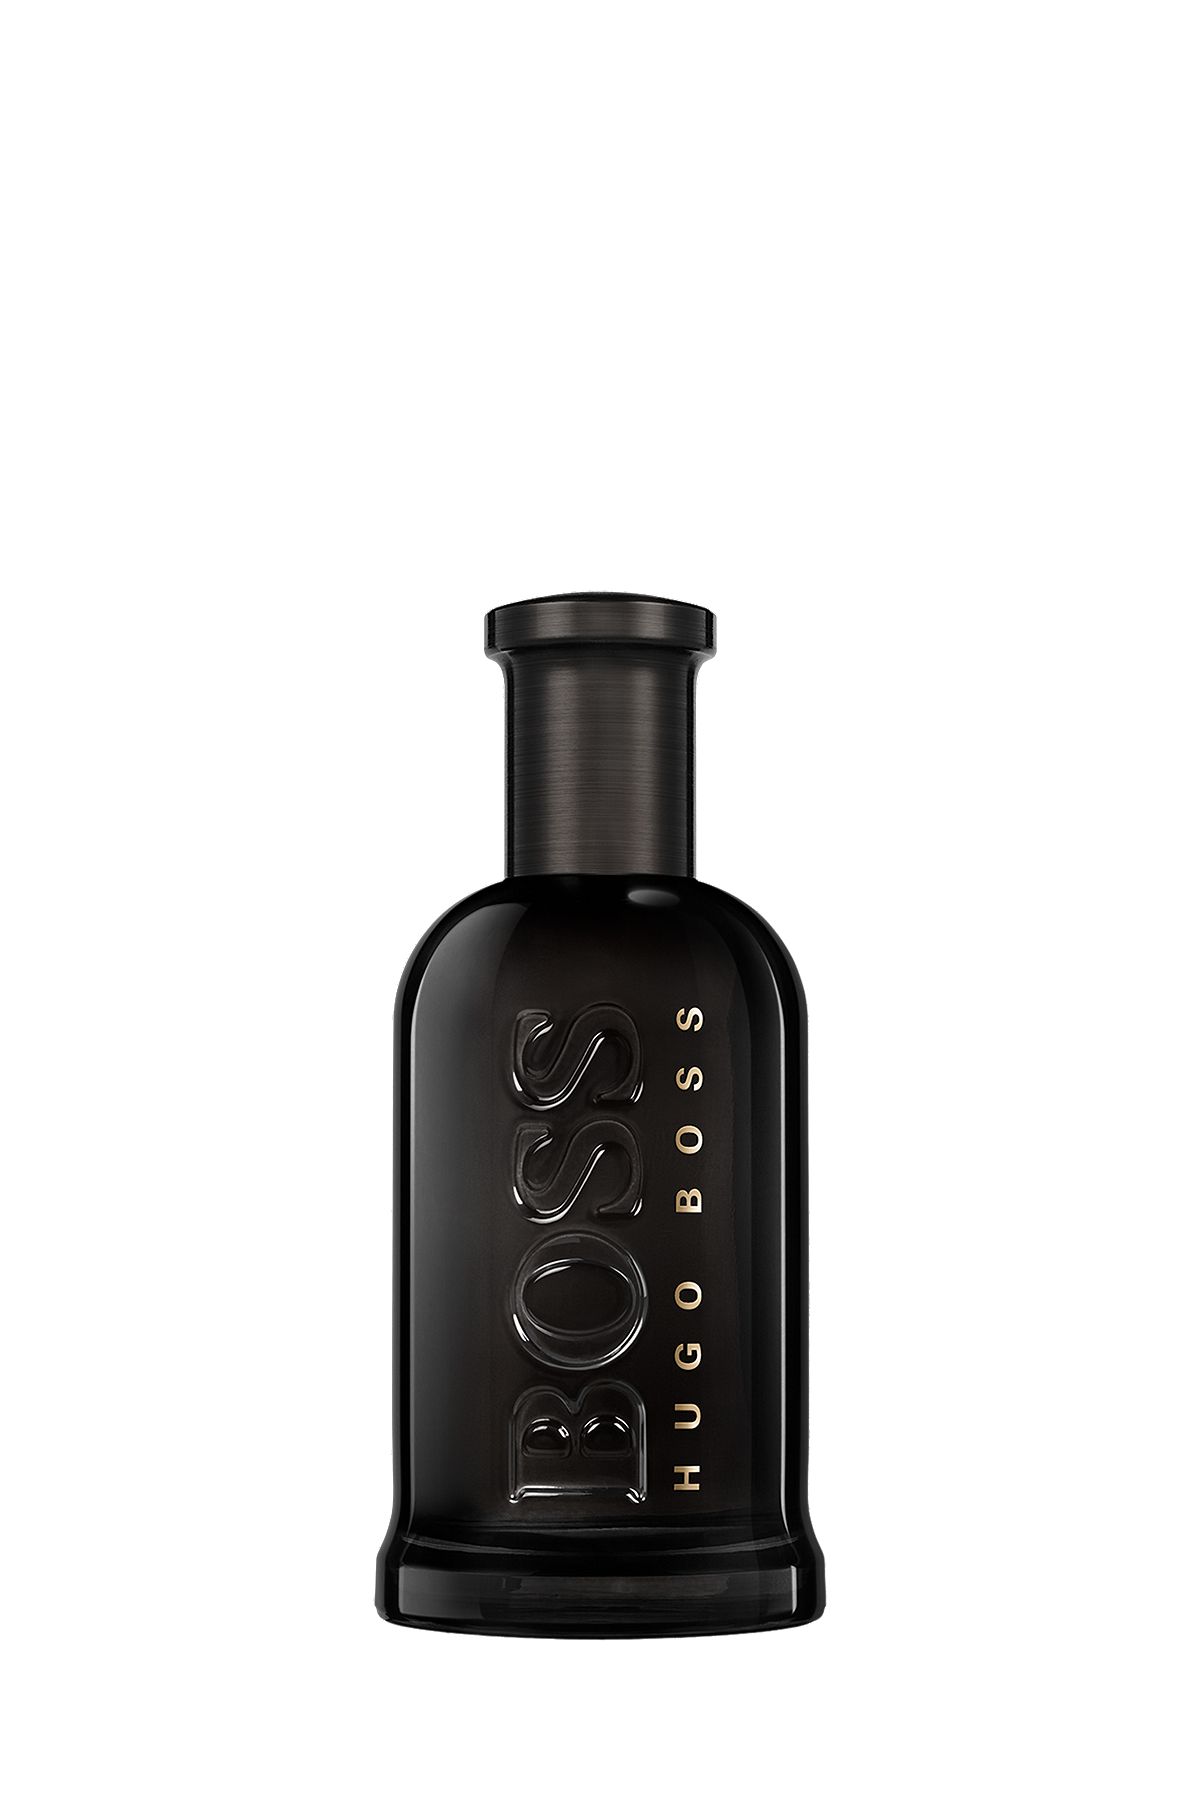 BOSS Bottled parfum 200ml, Assorted-Pre-Pack